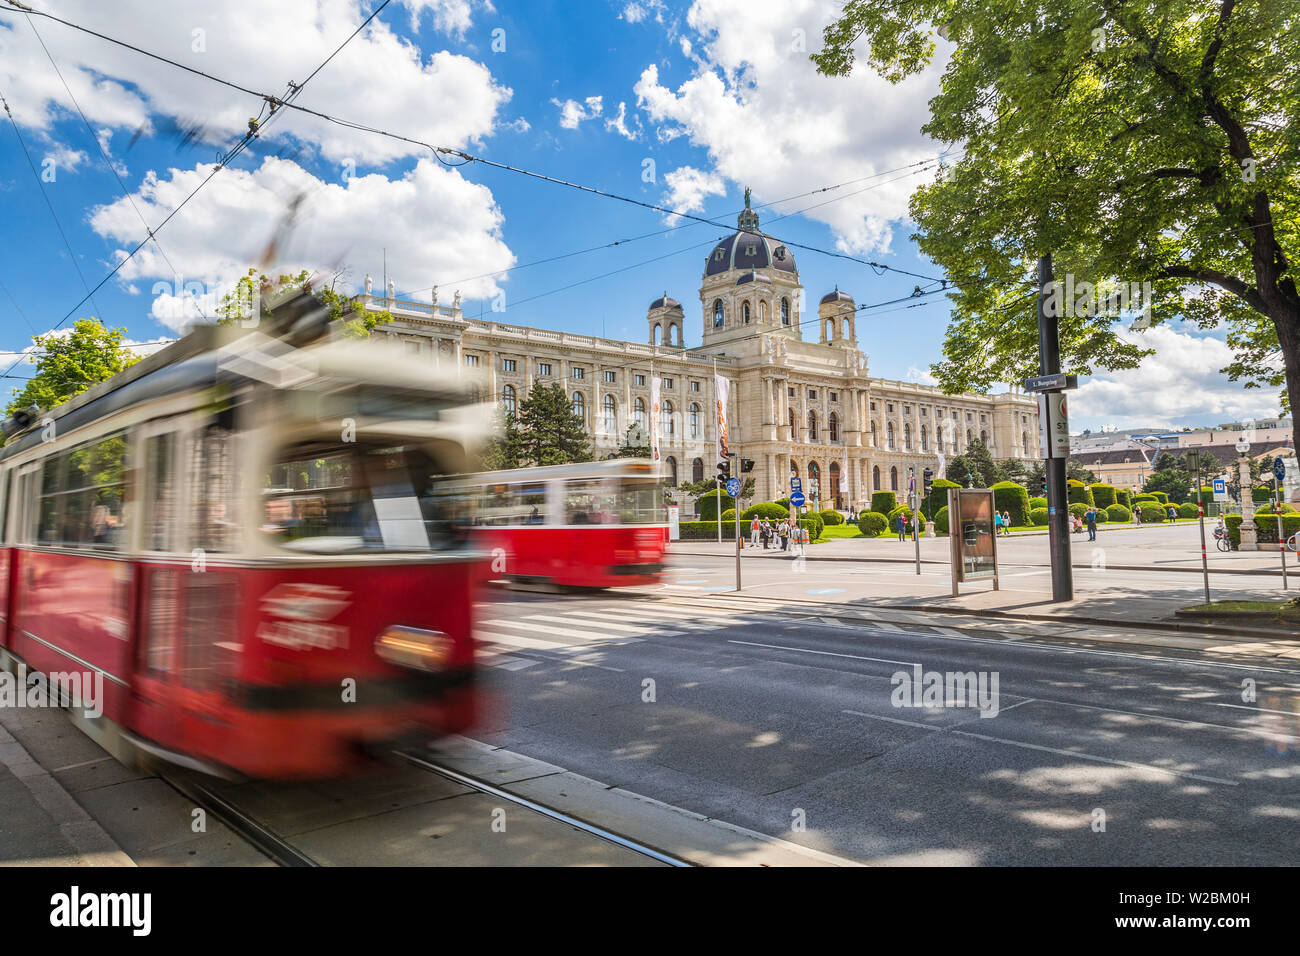 Trams in front of Kunsthistorisches, Historic Art Museum, Vienna, Austria Stock Photo